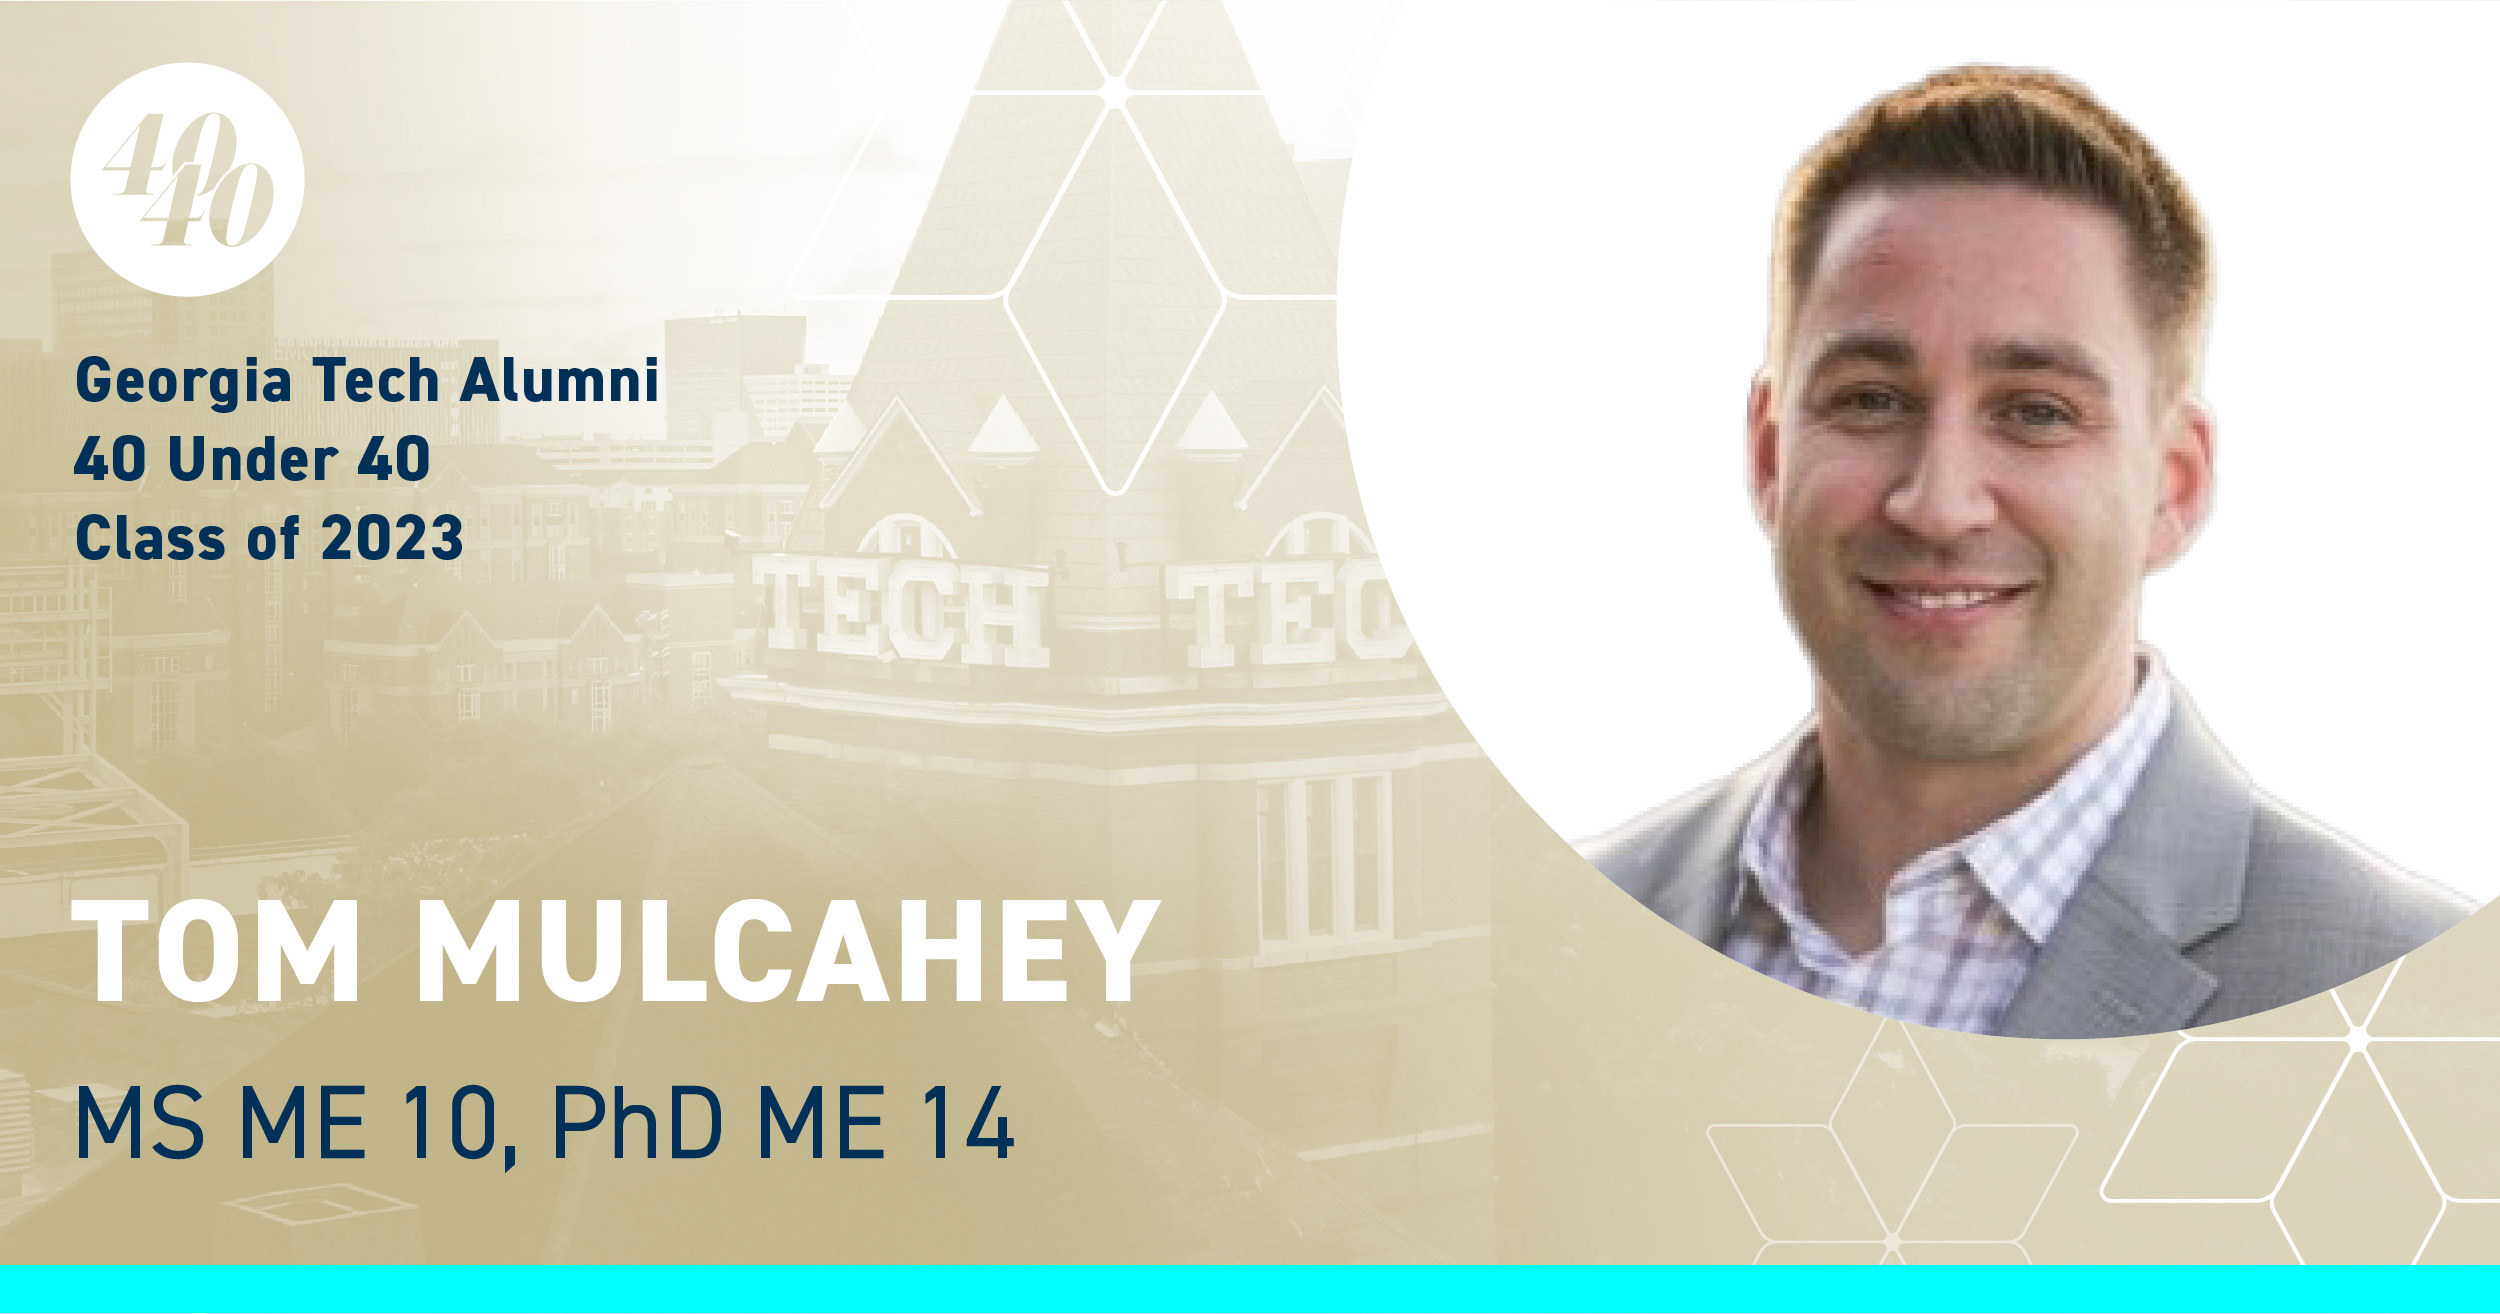 Tom Mulcahey, MS ME 10, PhD ME 14